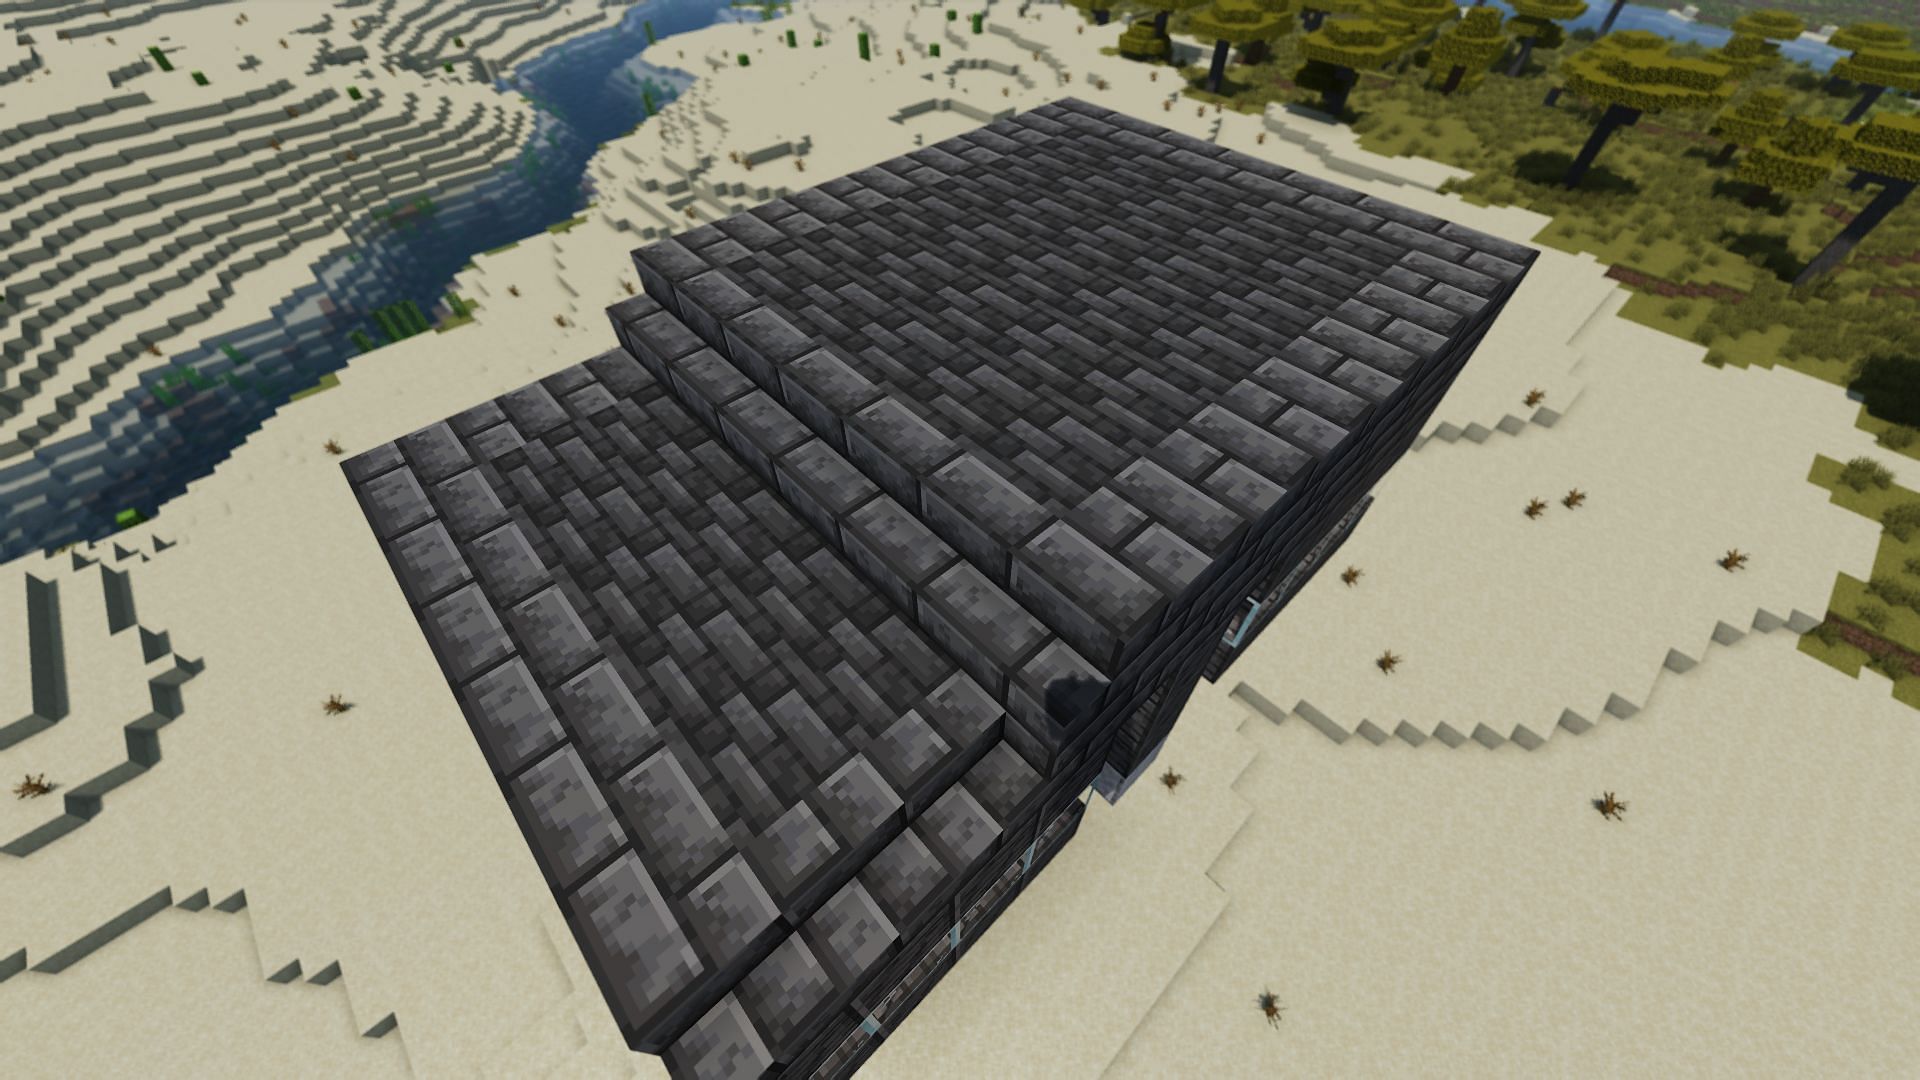 The second upper platform (Image via Minecraft)